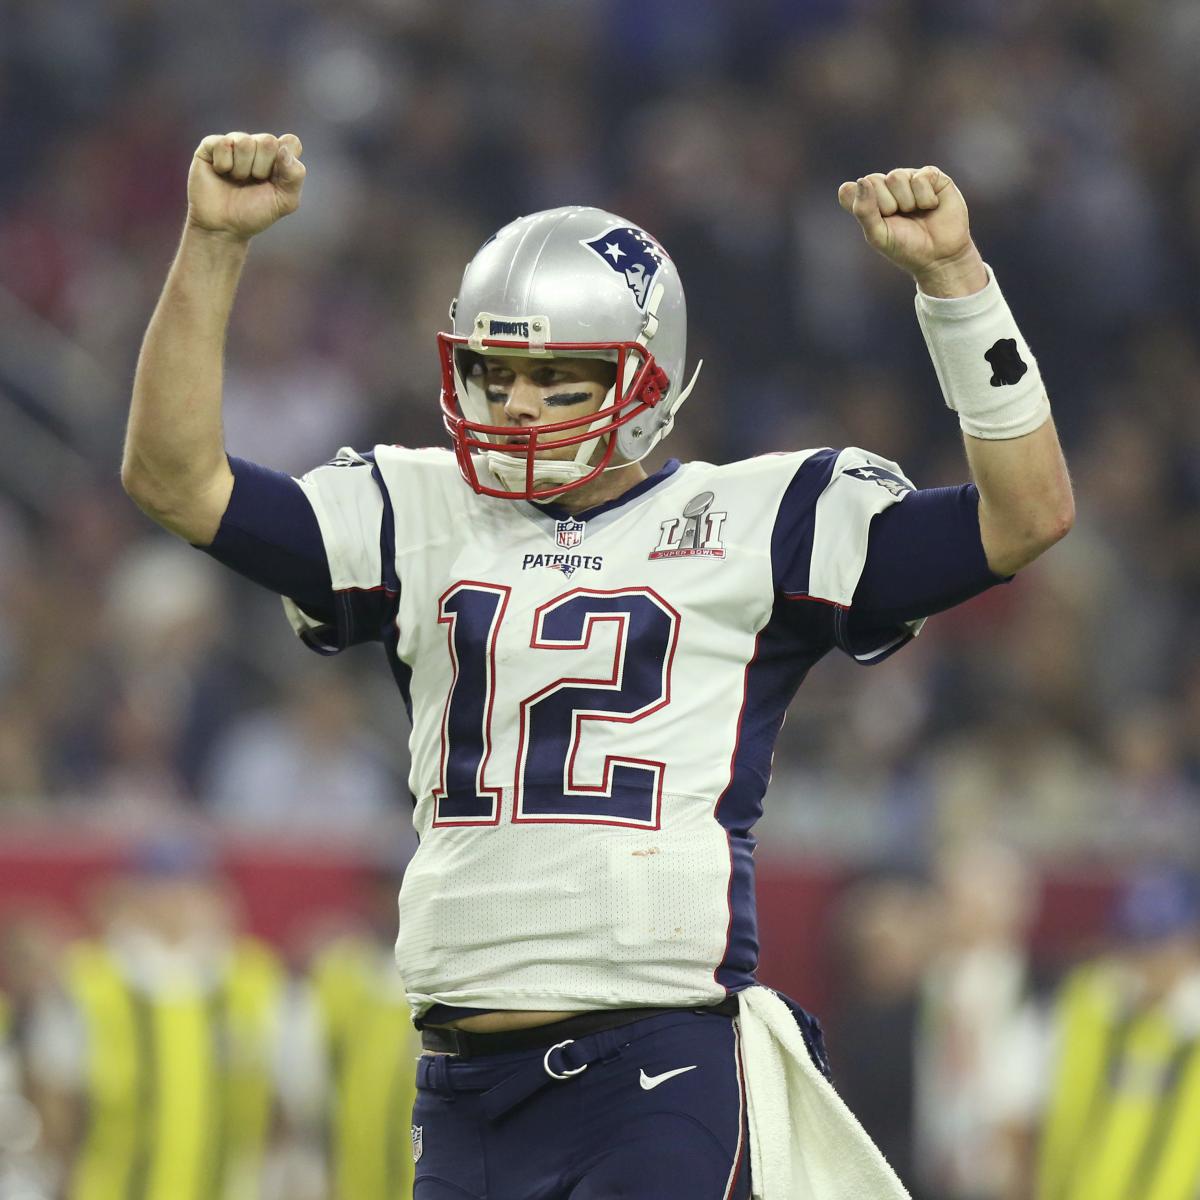 Tom Brady Super Bowl NFL Jerseys for sale